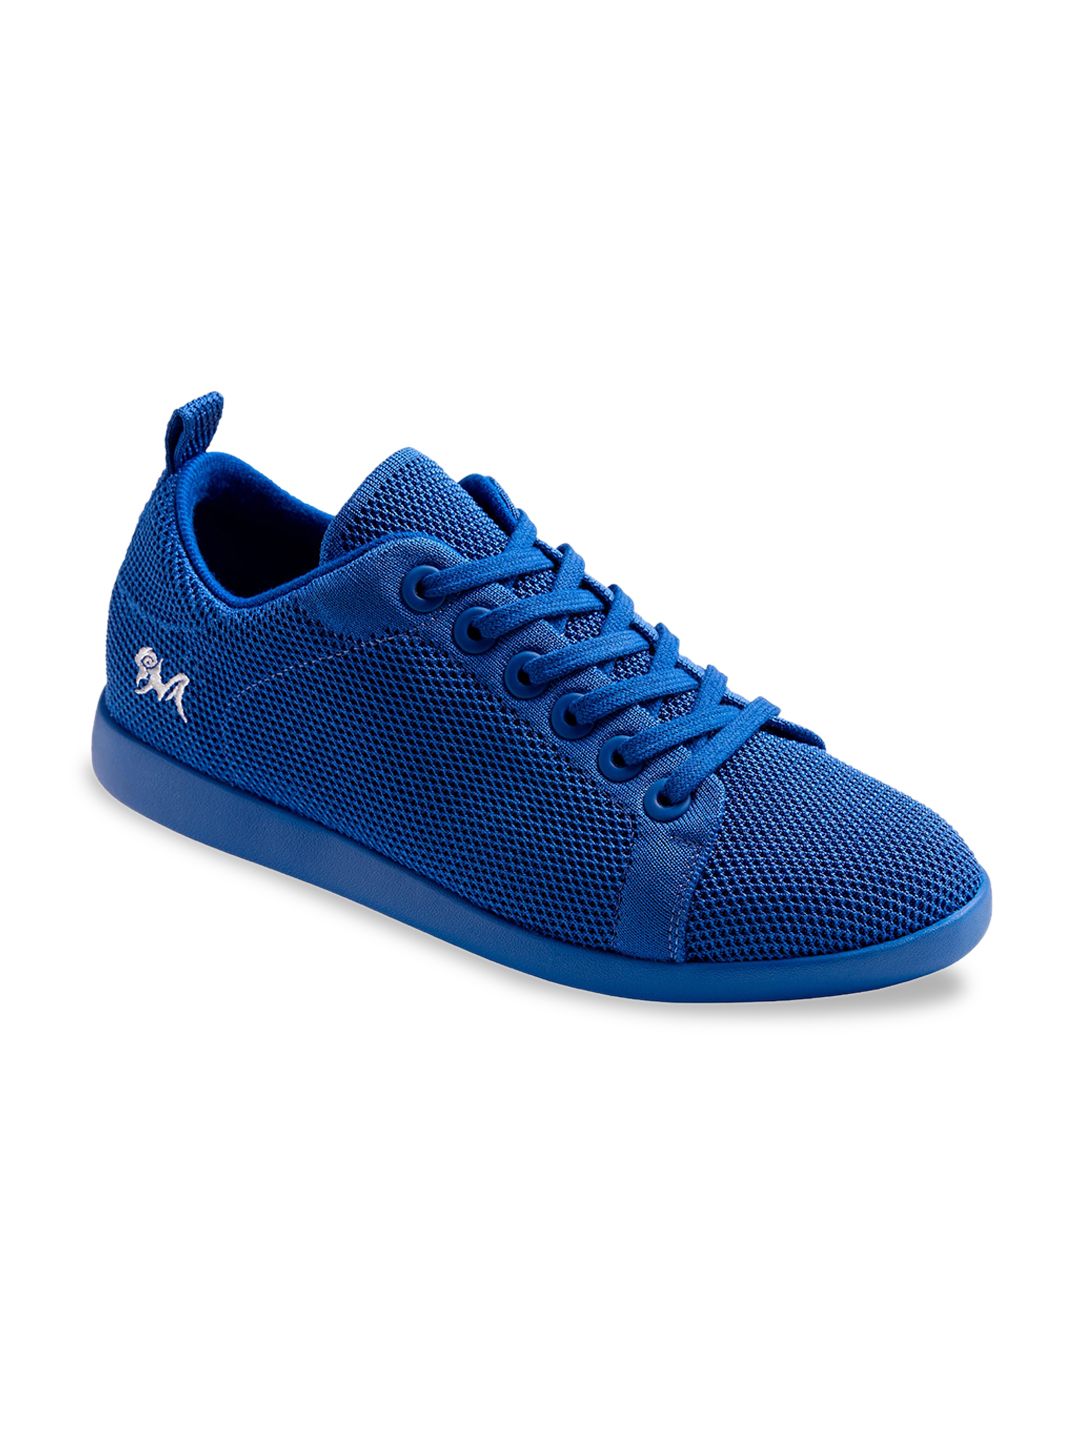 NEEMANS Unisex Blue Textured Sneakers Price in India